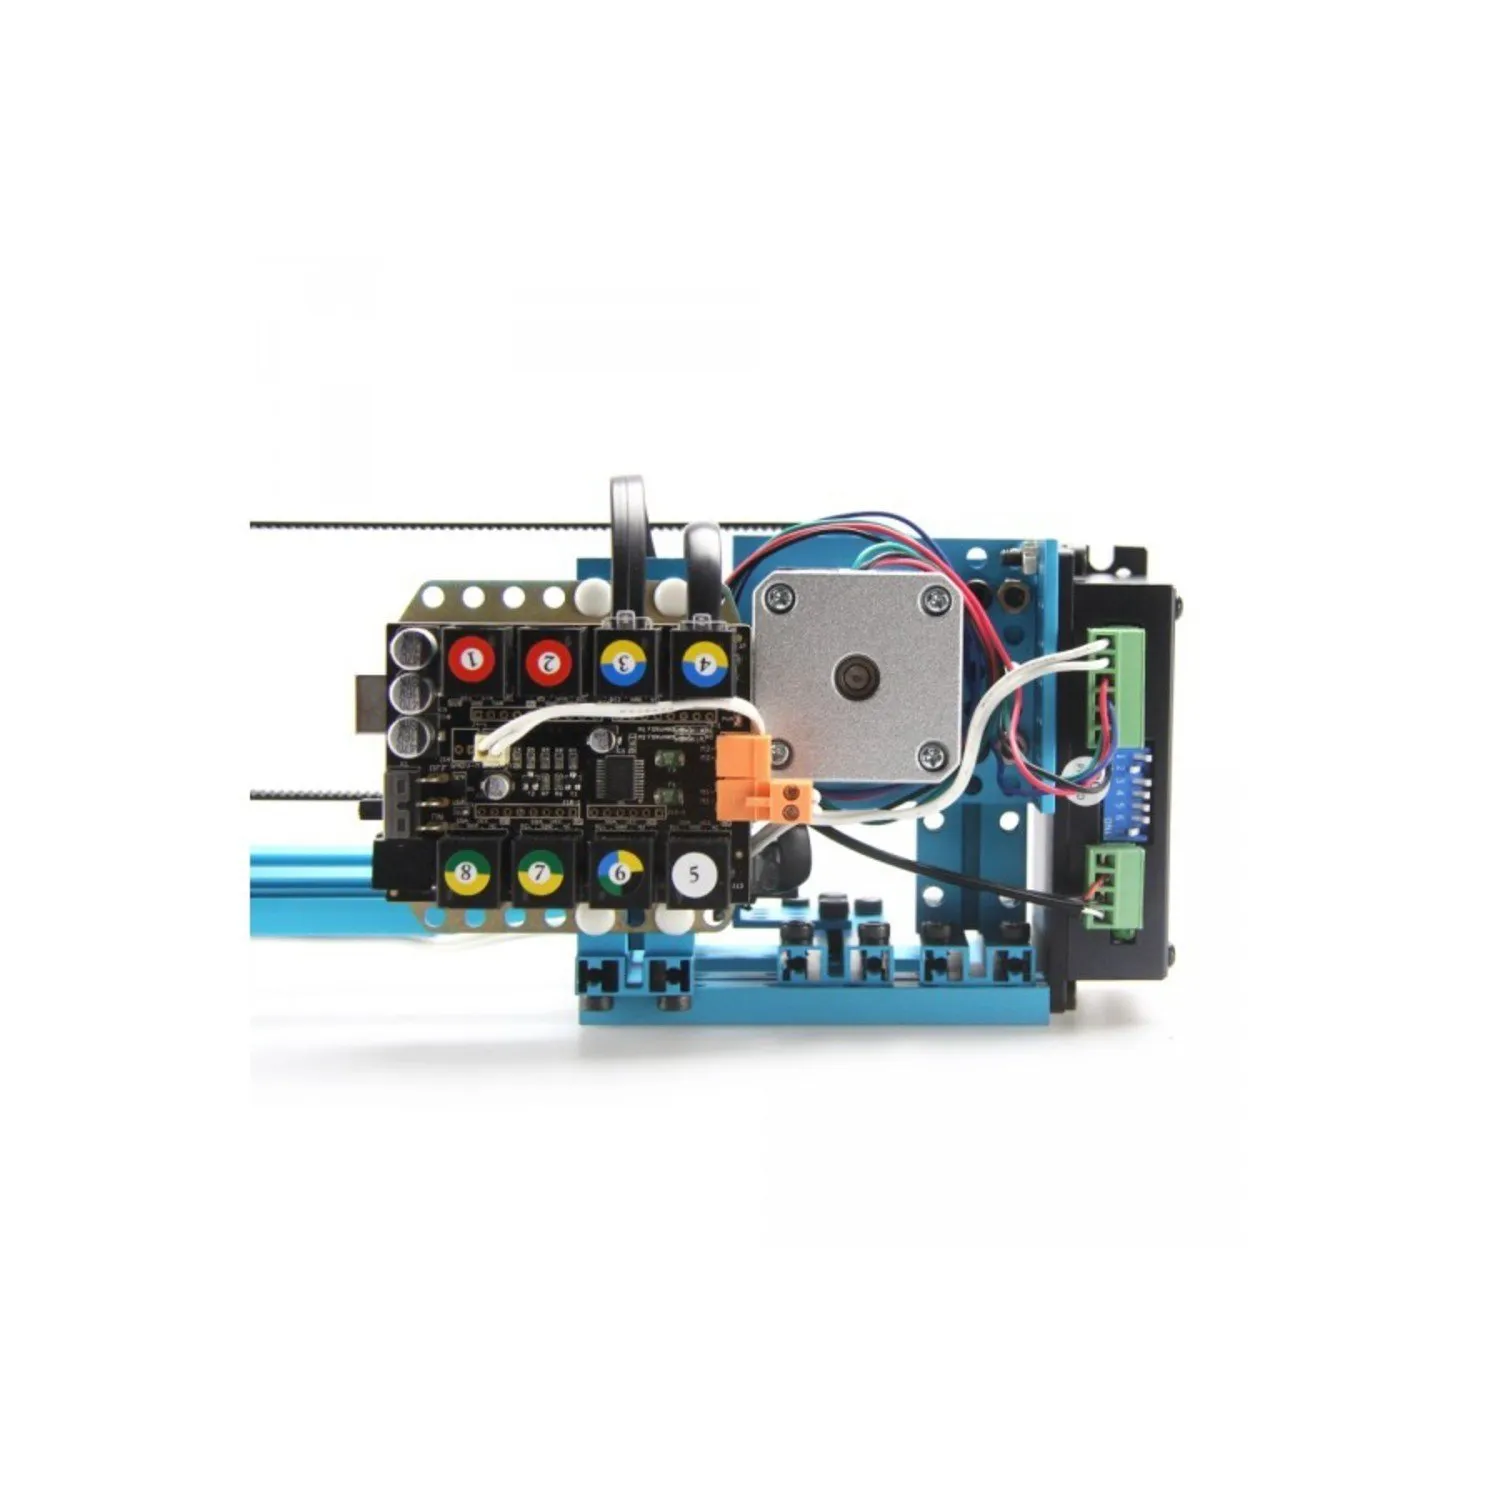 Photo of Makeblock Music Robot Kit (With Electronics) - DIY Educational Robot Kit